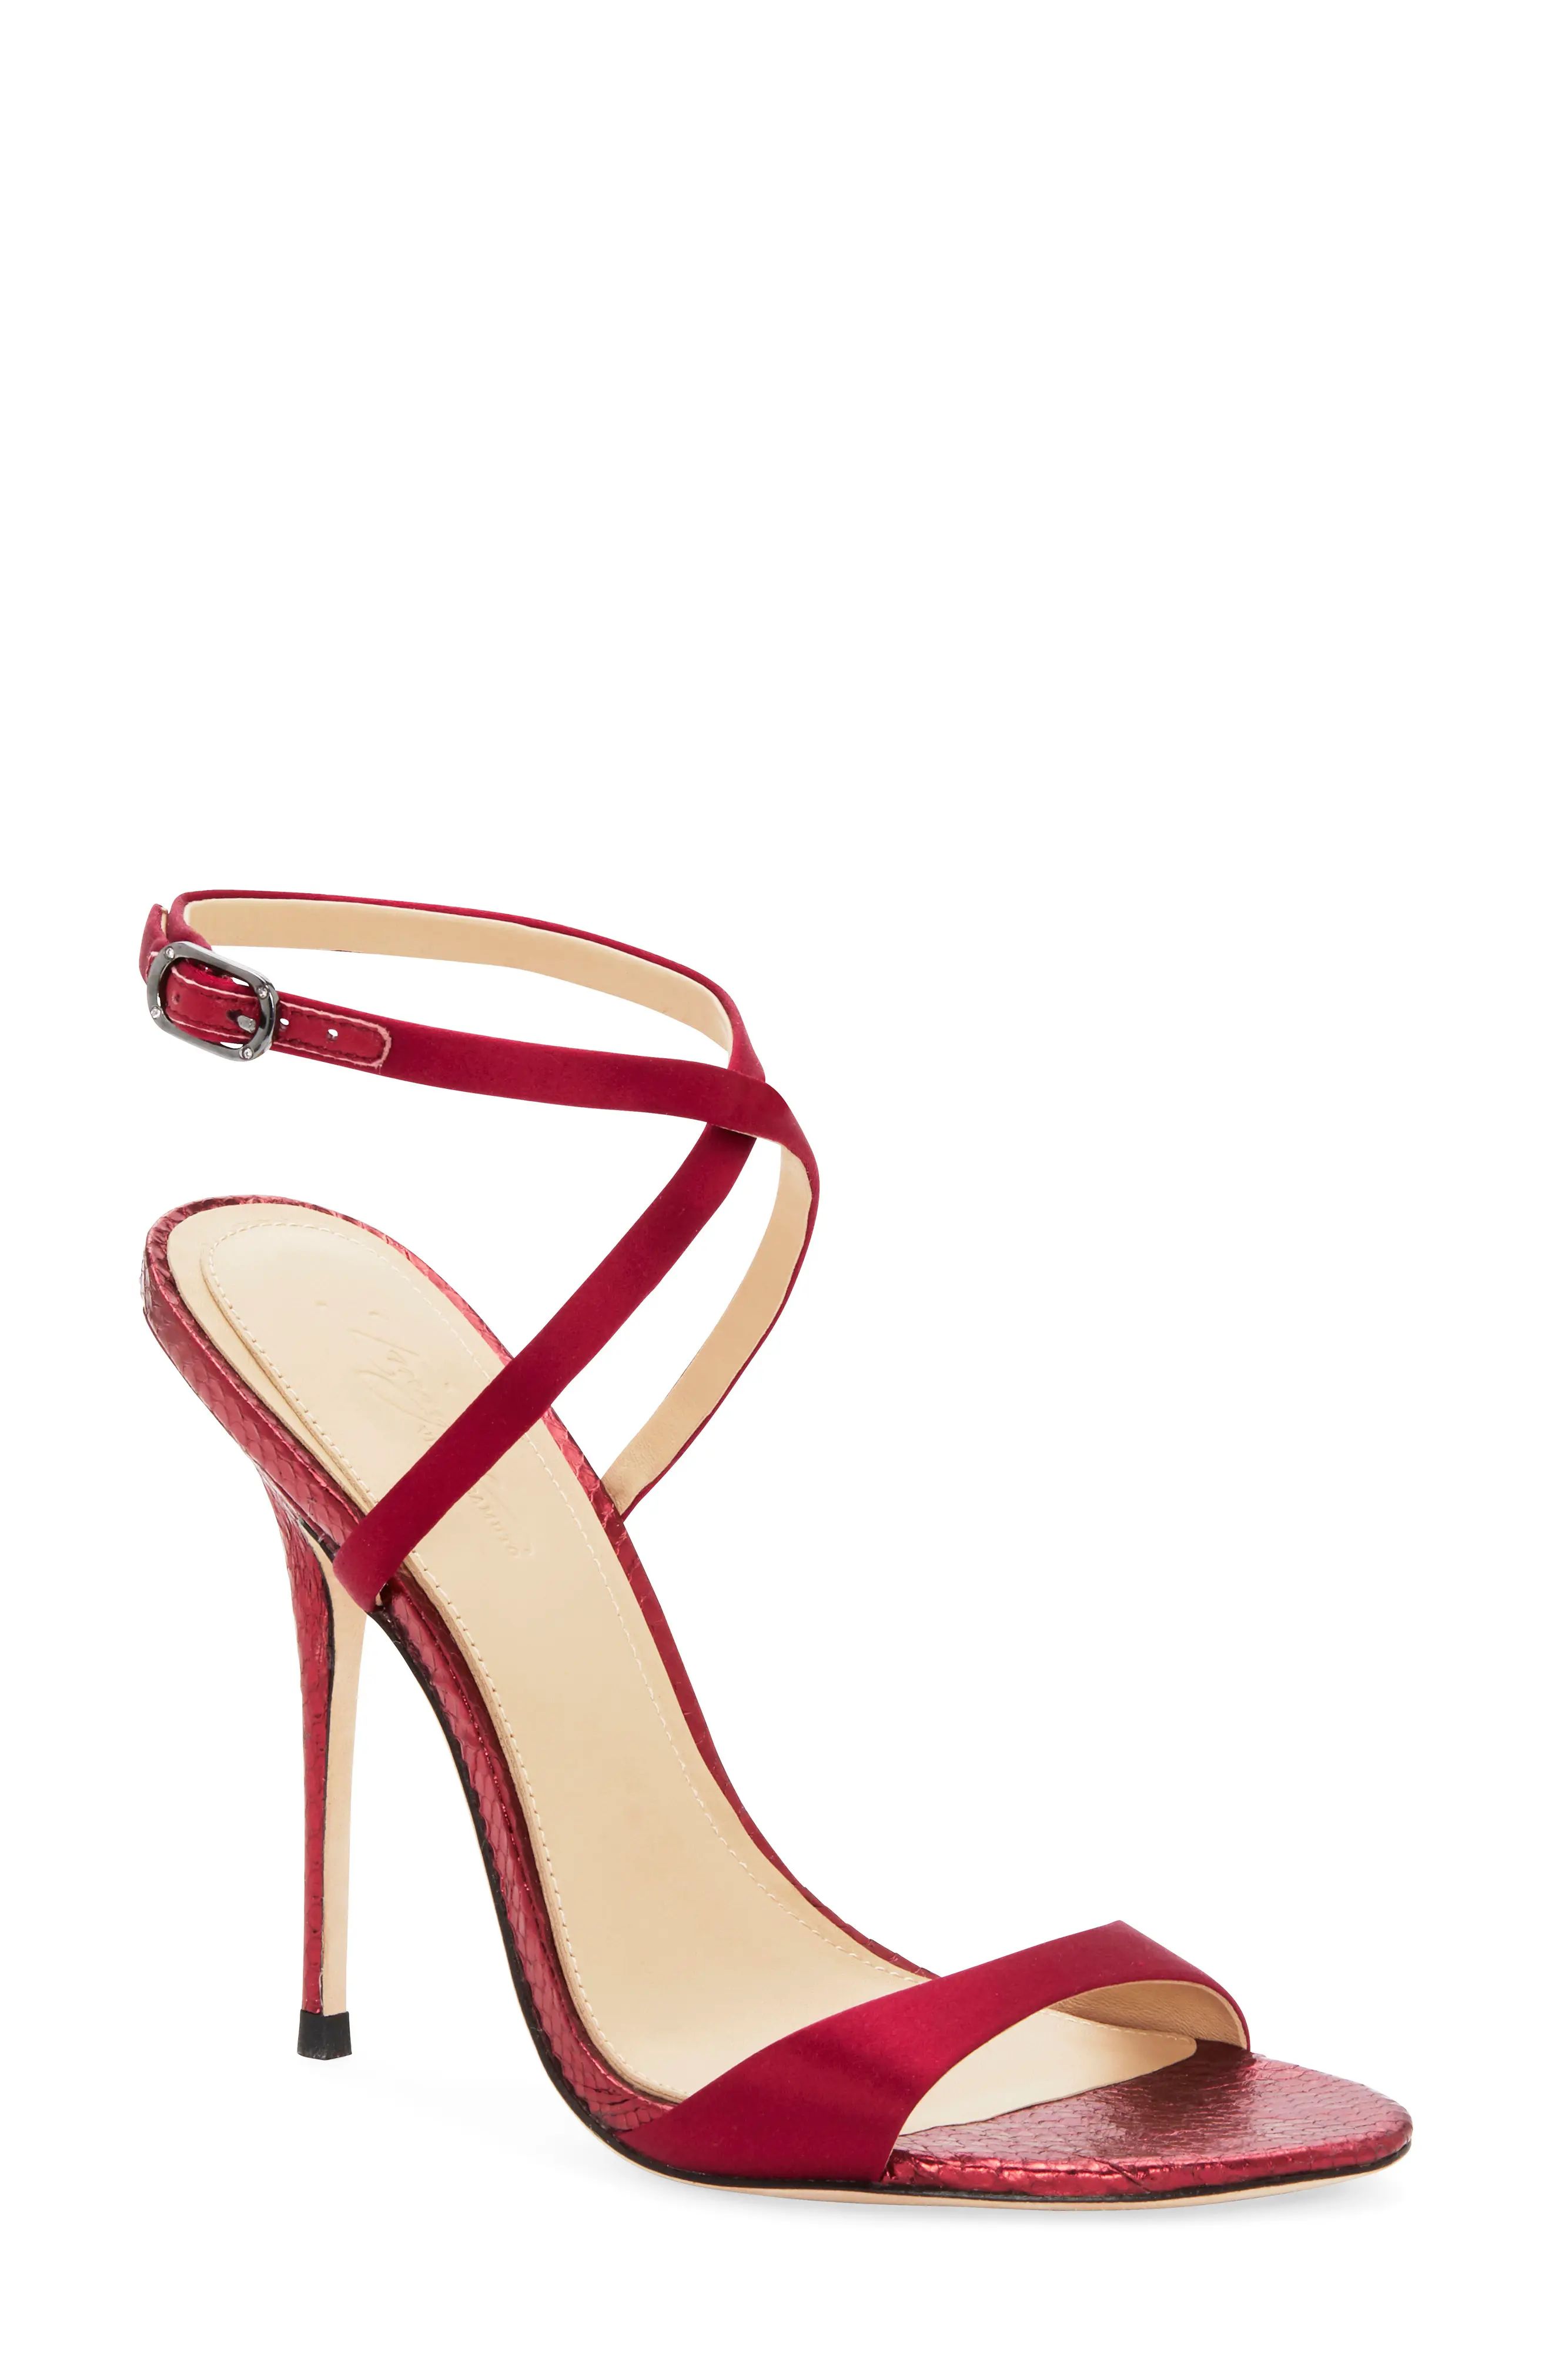 Women's Imagine Vince Camuto Rora Ankle Strap Stiletto Sandal, Size 5.5 M - Burgundy | Nordstrom